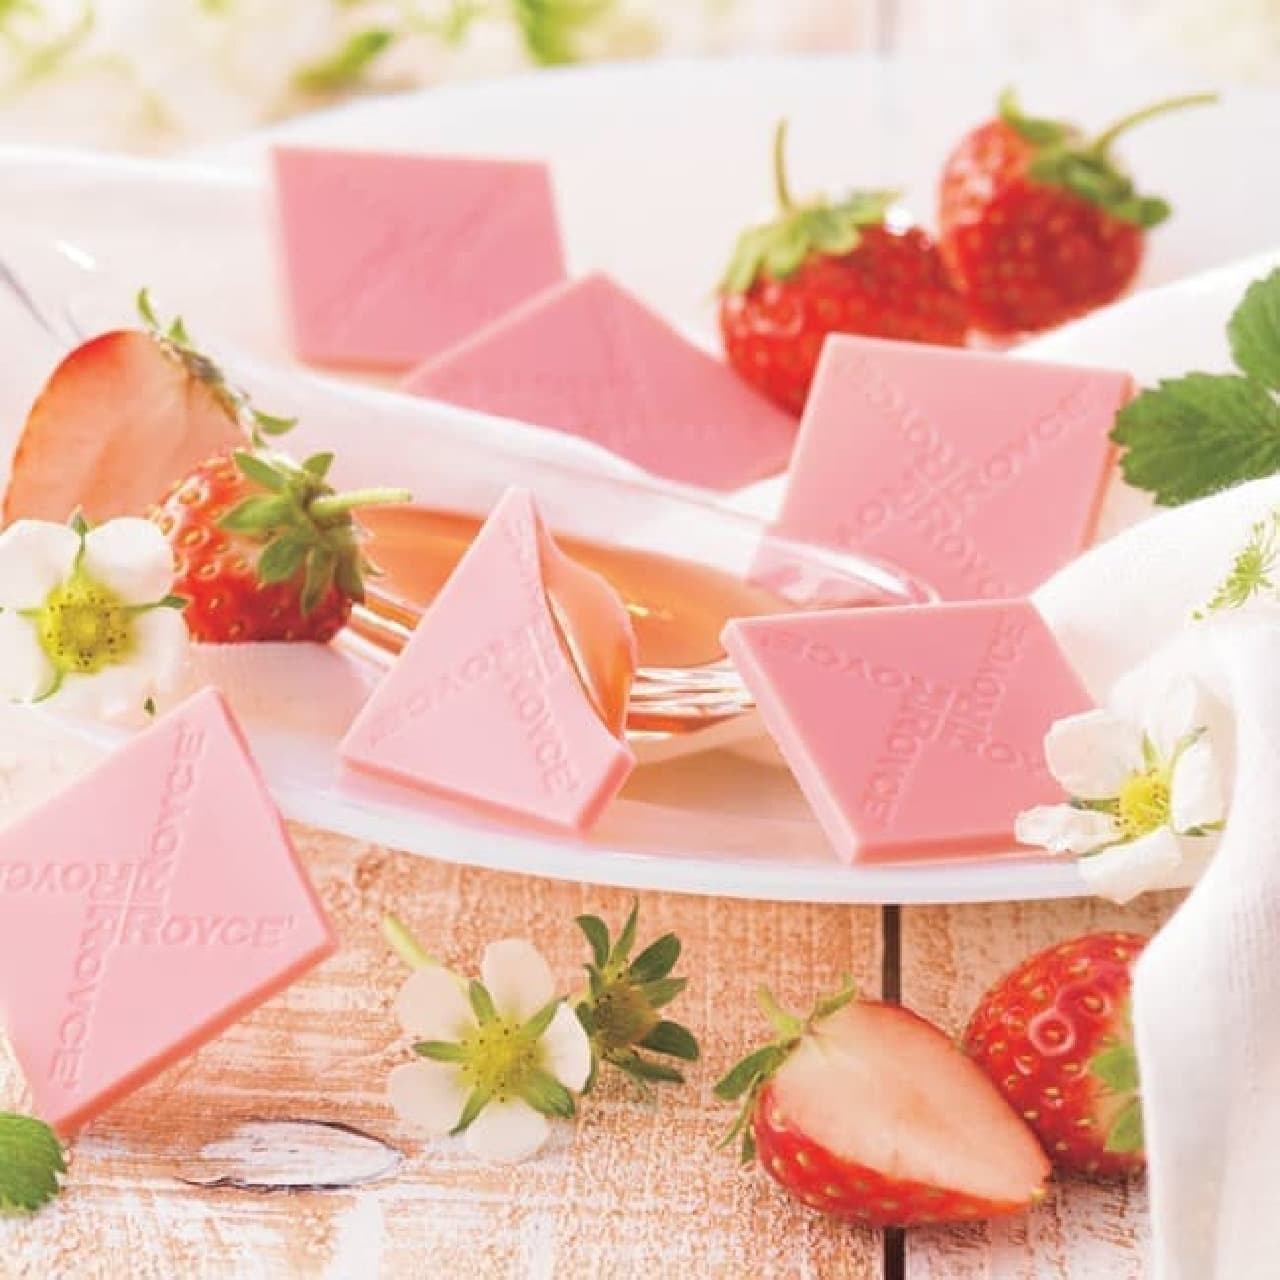 Lloyds "Prafille Chocolat [Strawberry]"